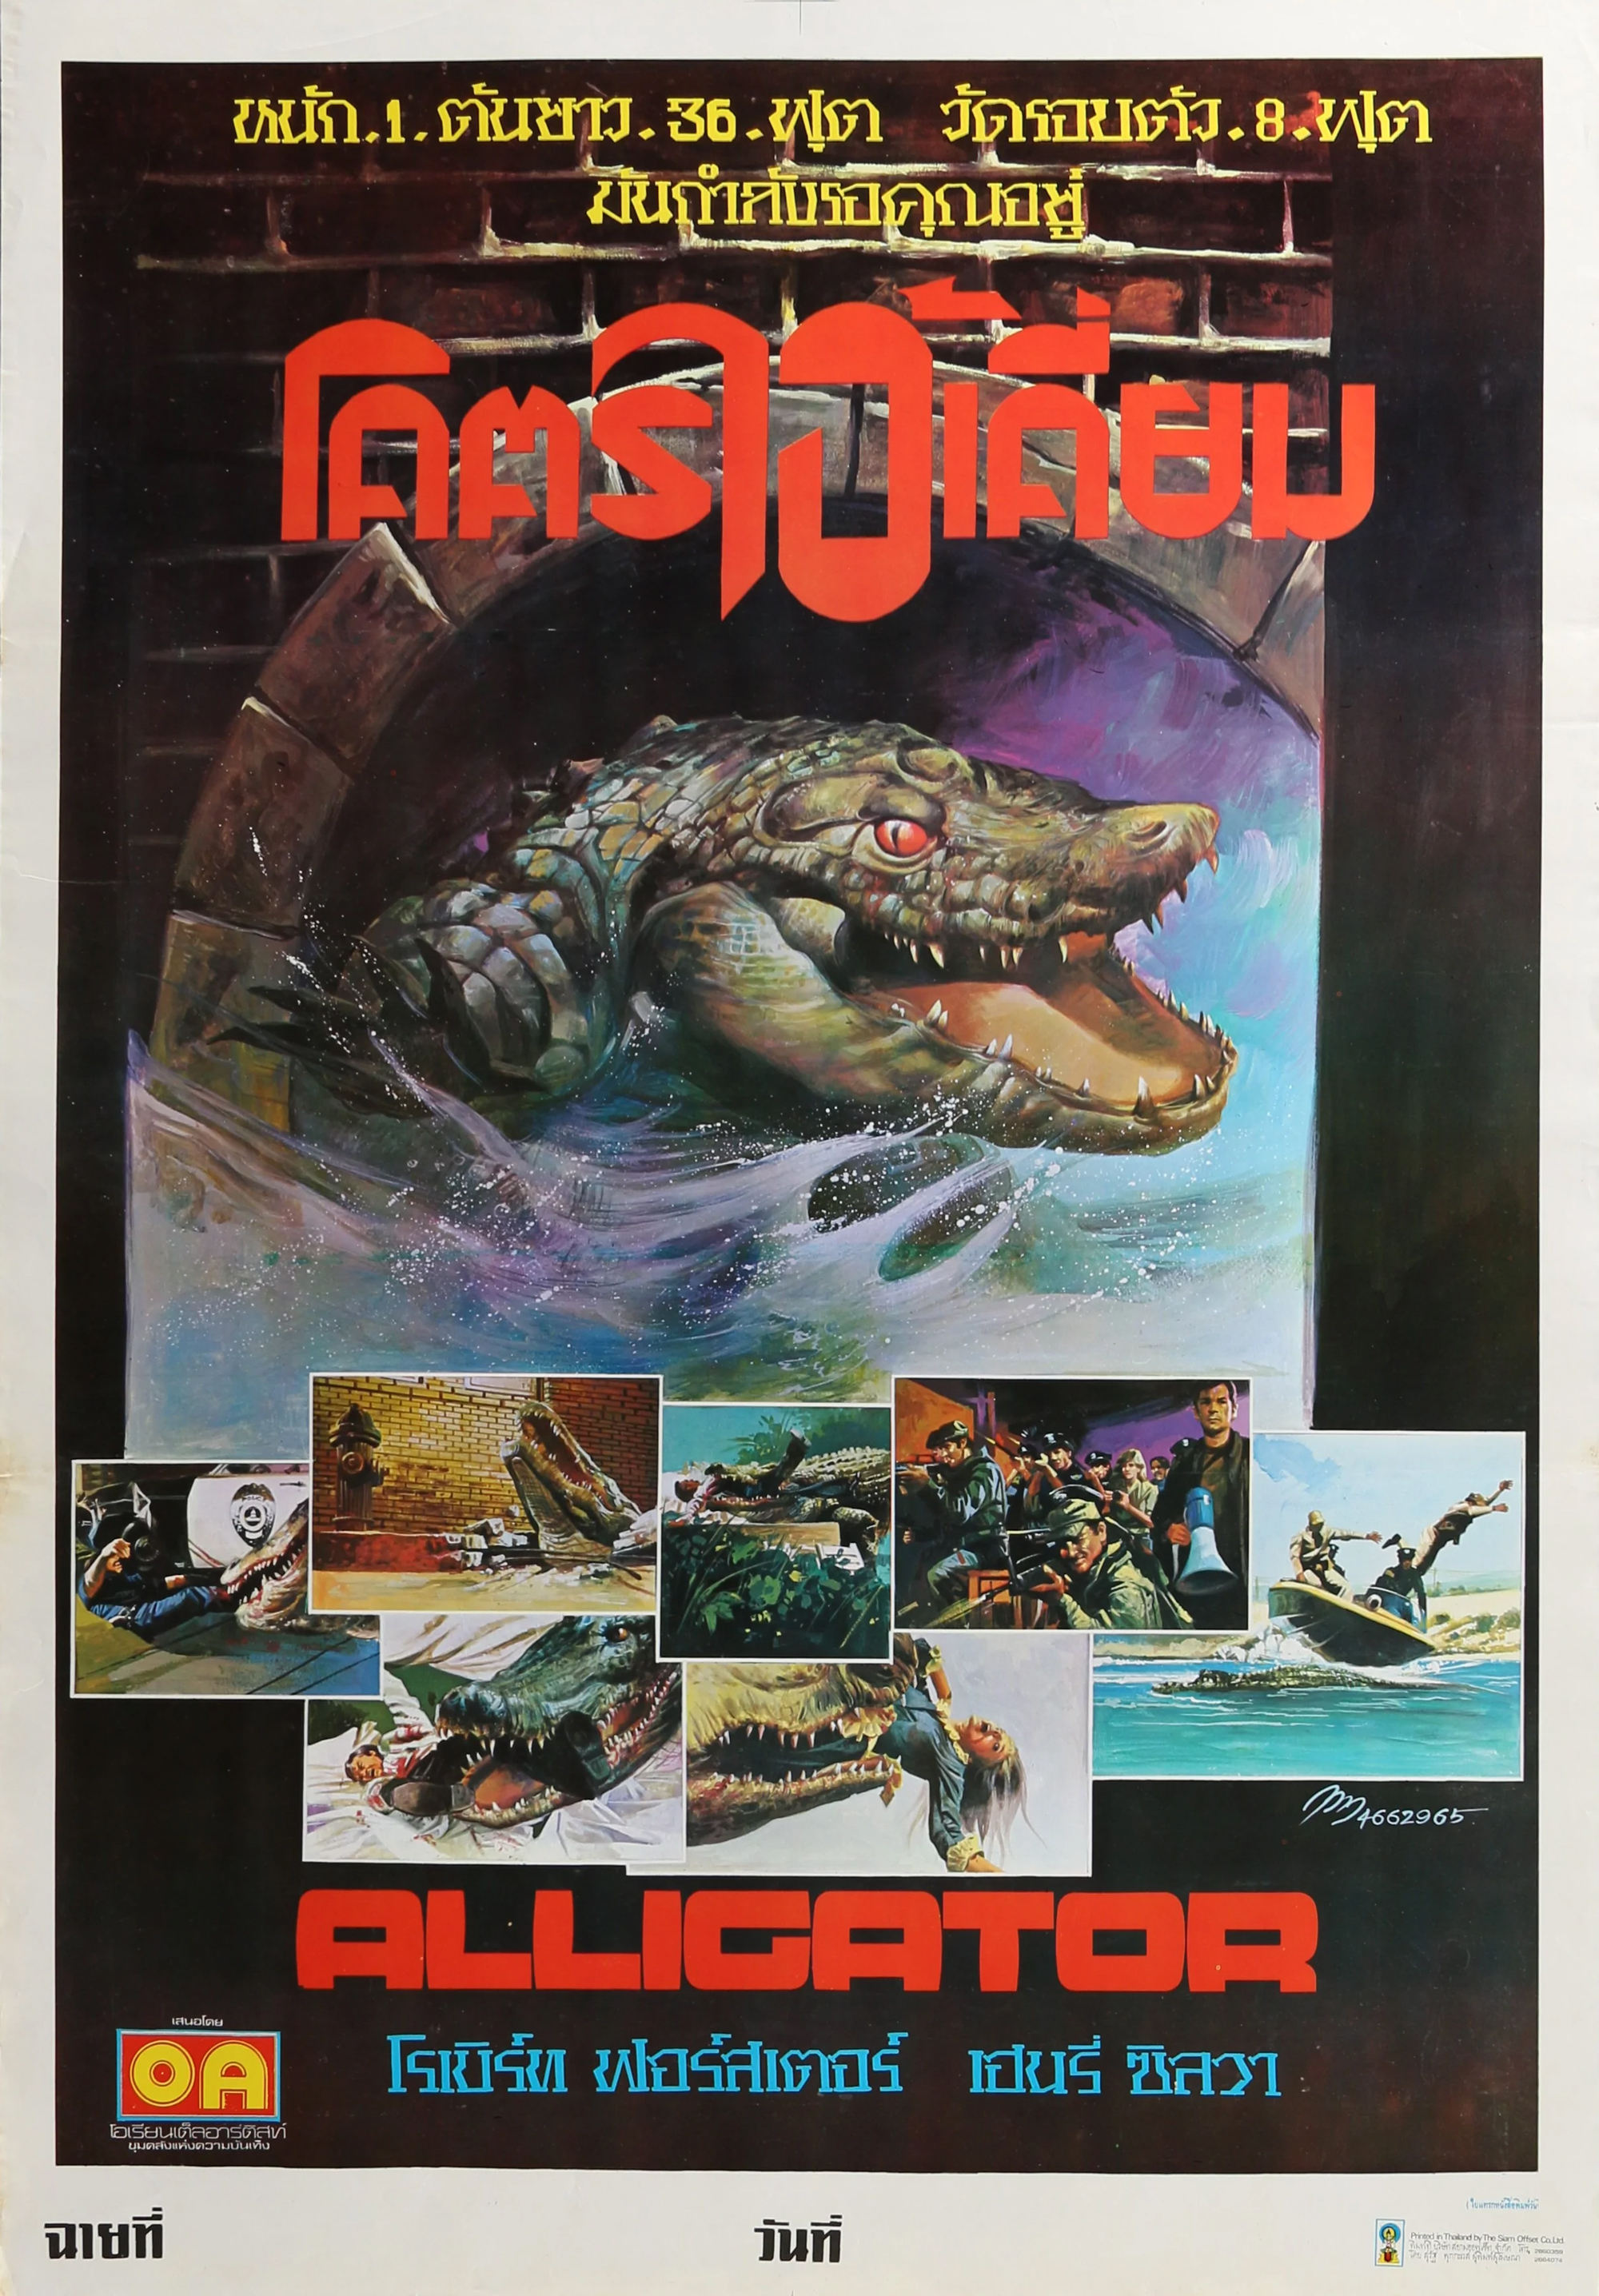 FANGORIA a X: "ALLIGATOR (1980) Thai poster https://t.co/ttO1ax0aOM" / X